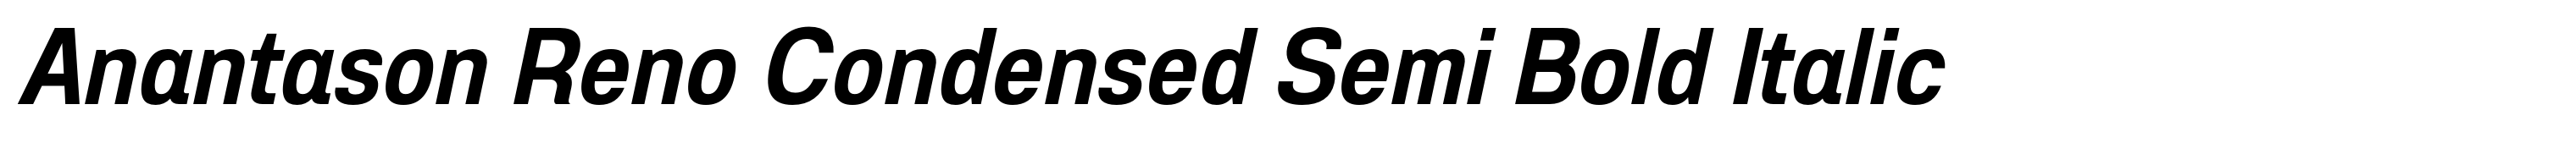 Anantason Reno Condensed Semi Bold Italic